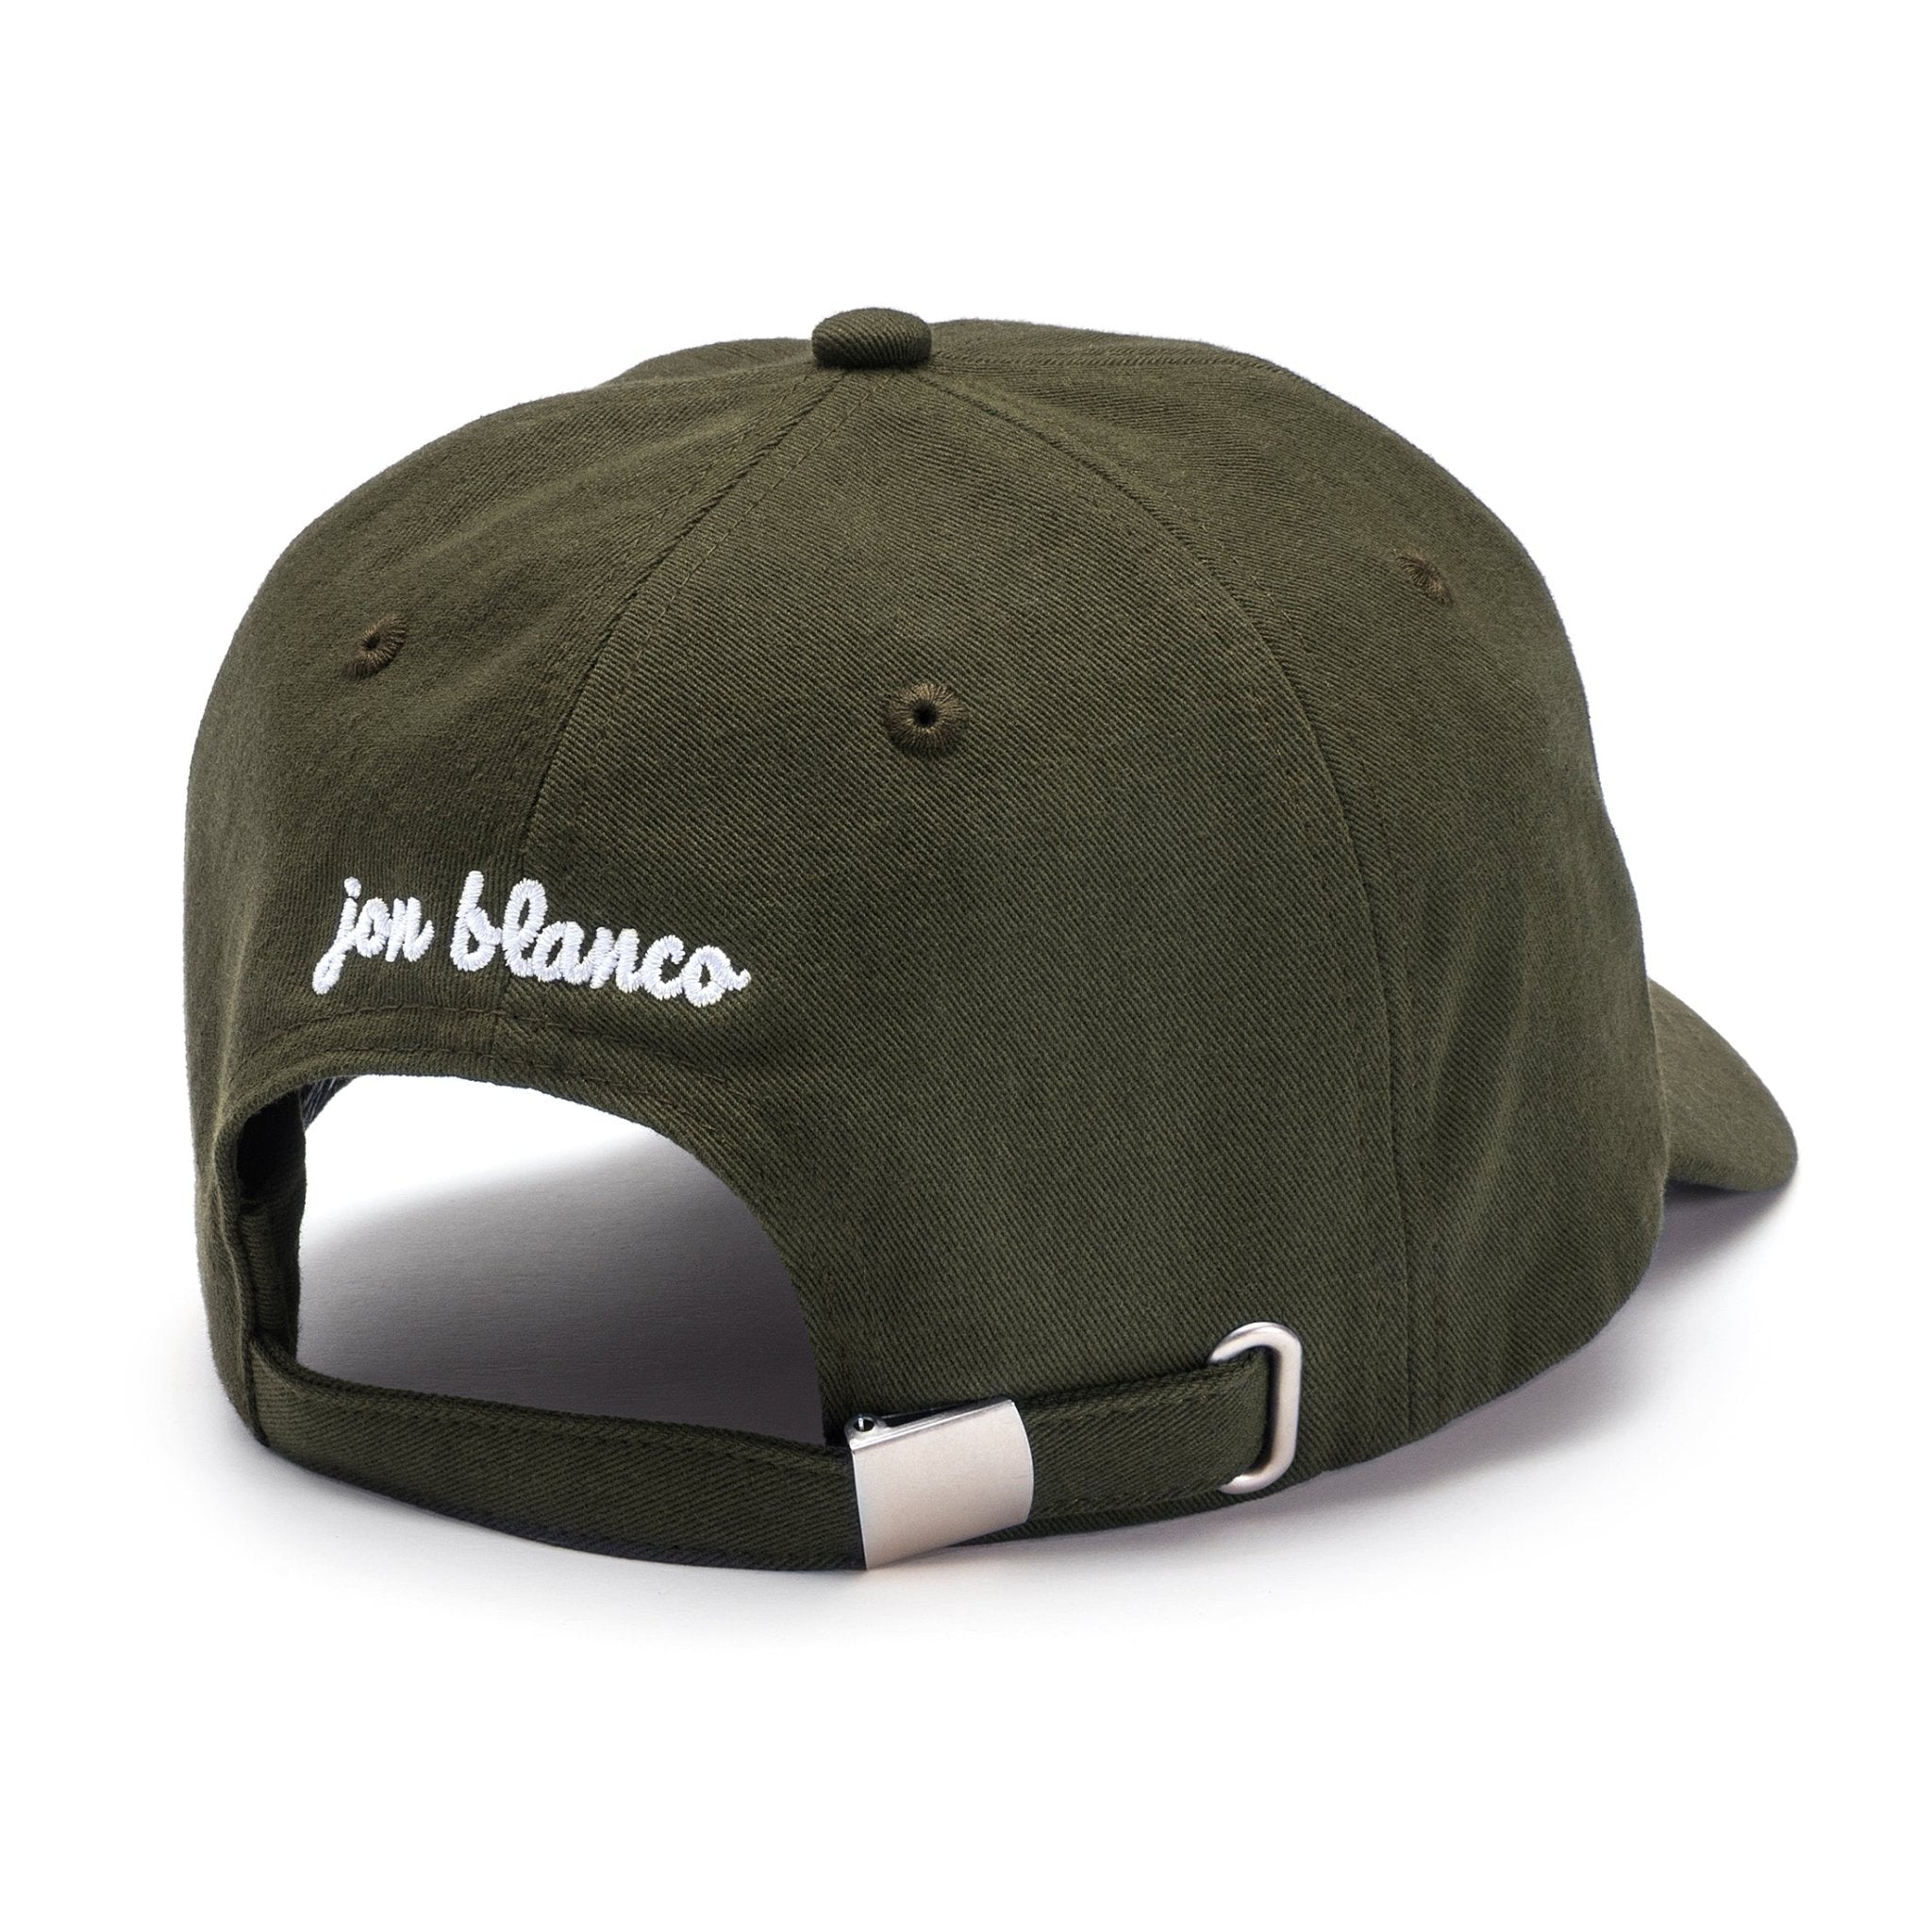 Organic Mid Profile Bear Hat - JON BLANCO